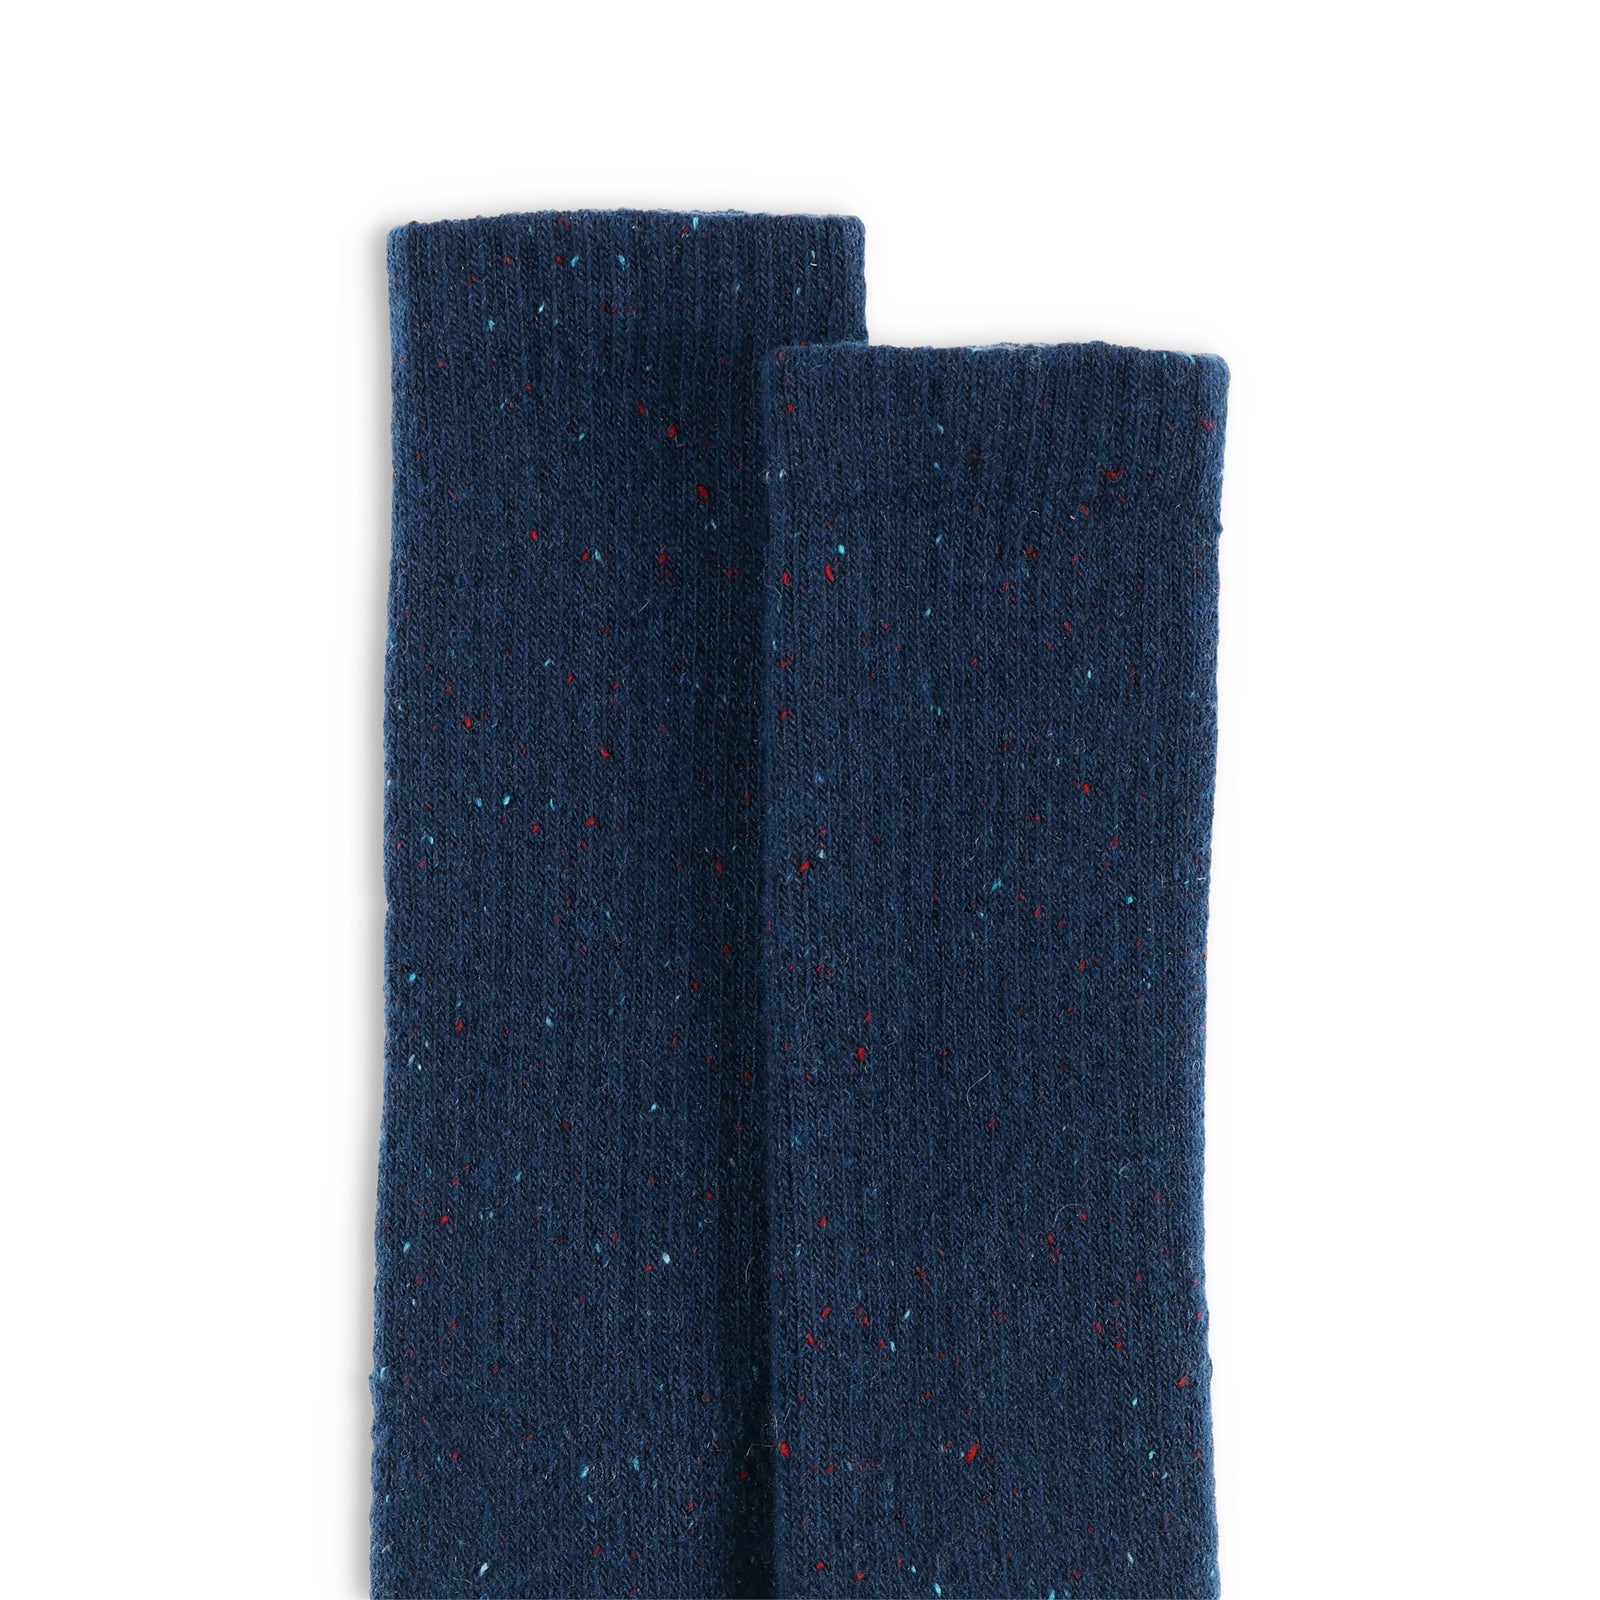 General detail shot of marled yarn on Topo Designs Mountain heavyweight wool blend hiking Socks in "Pond Blue"